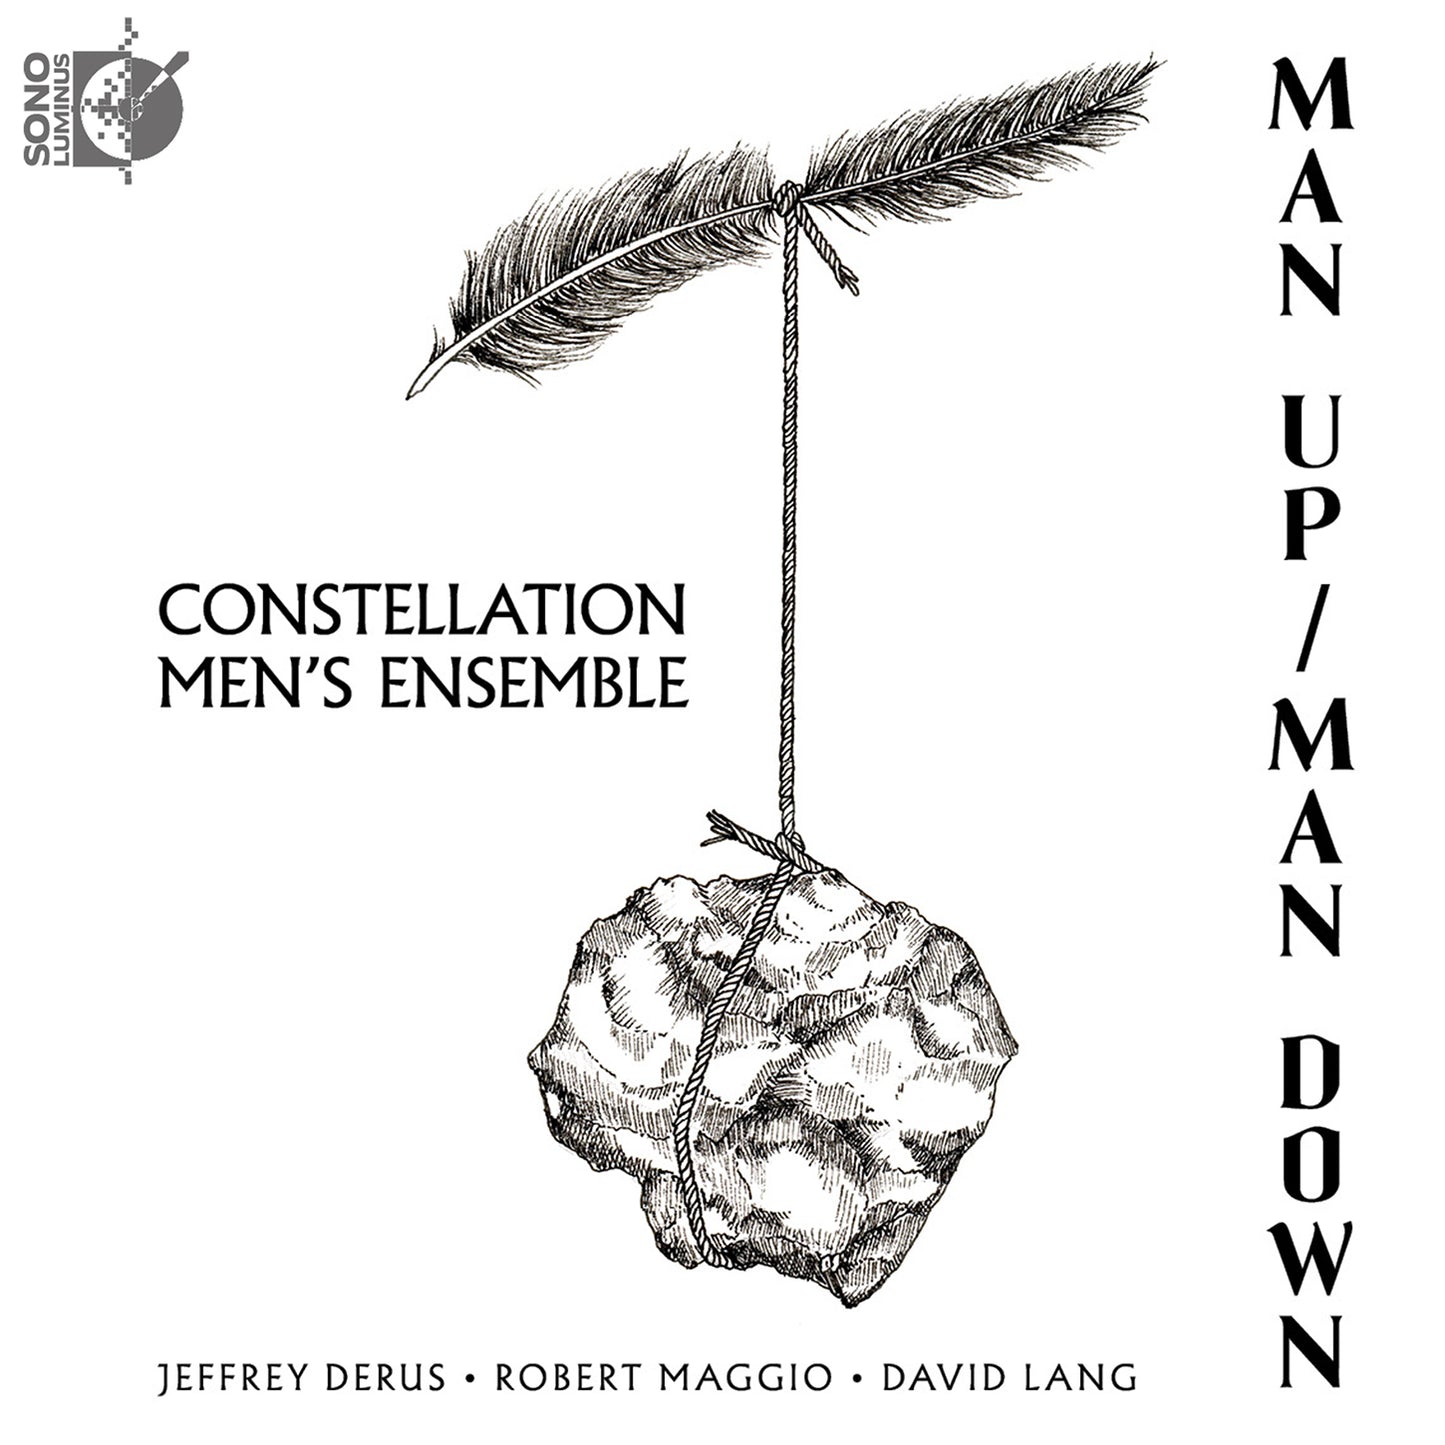 Robert Maggio: Man Up / Man Down / Constellation Men's Ensemble